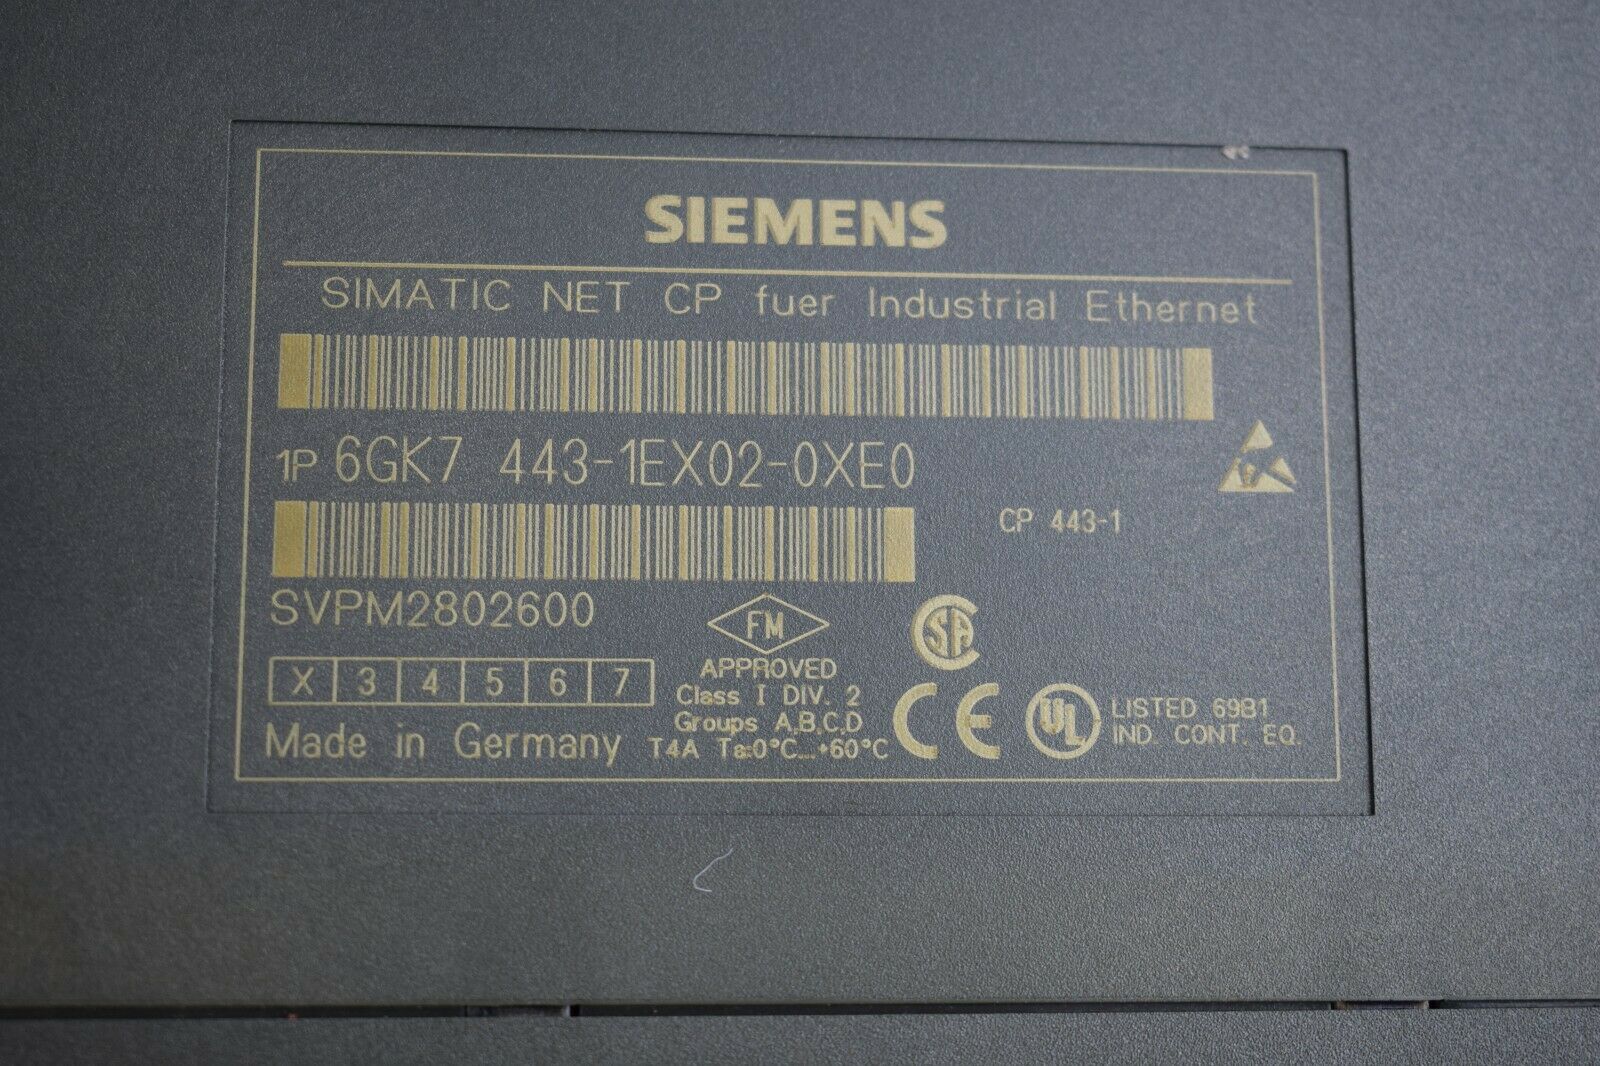 Siemens simatic NET CP 6GK7 443-1EX02-0XE0 ( 6GK7443-1EX02-0XE0 )